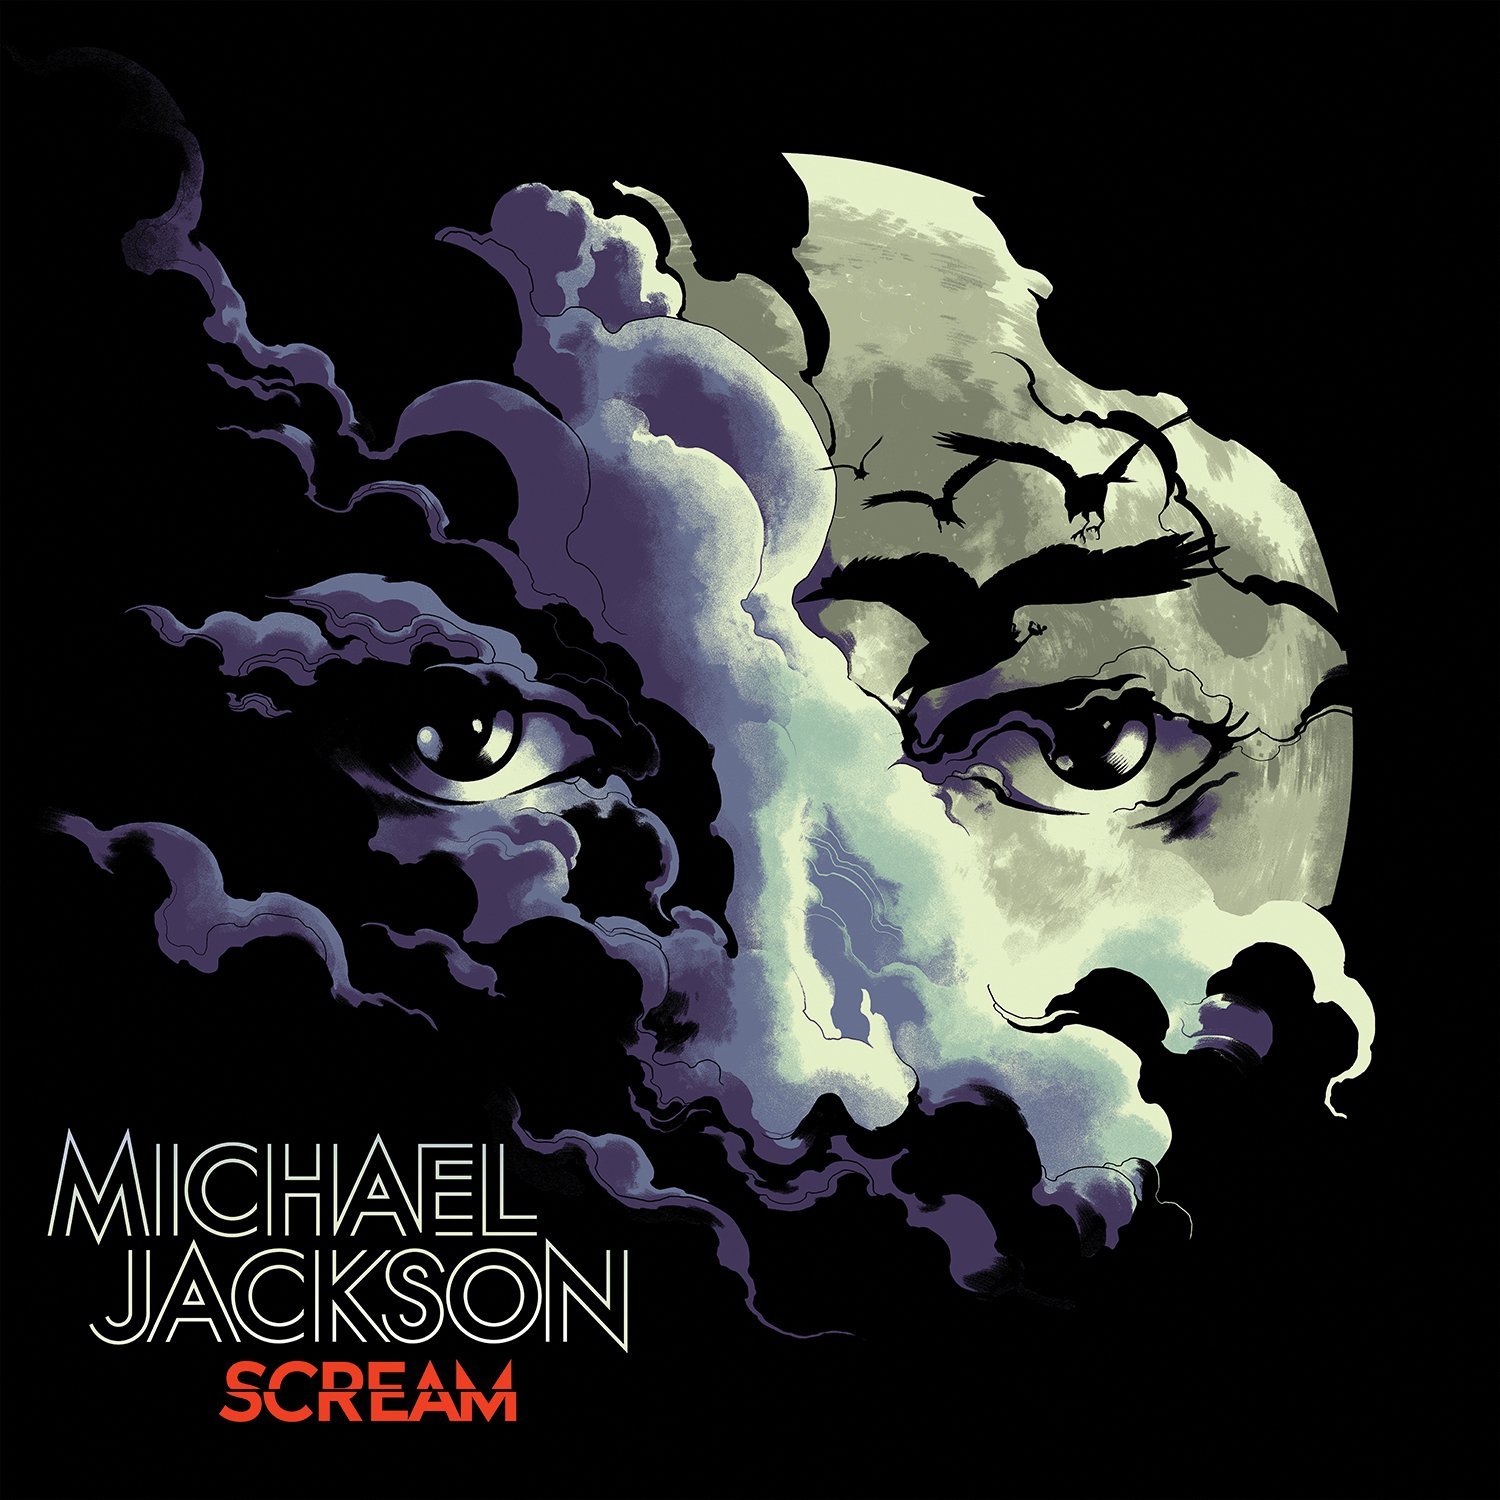 Michael Jackson Scream